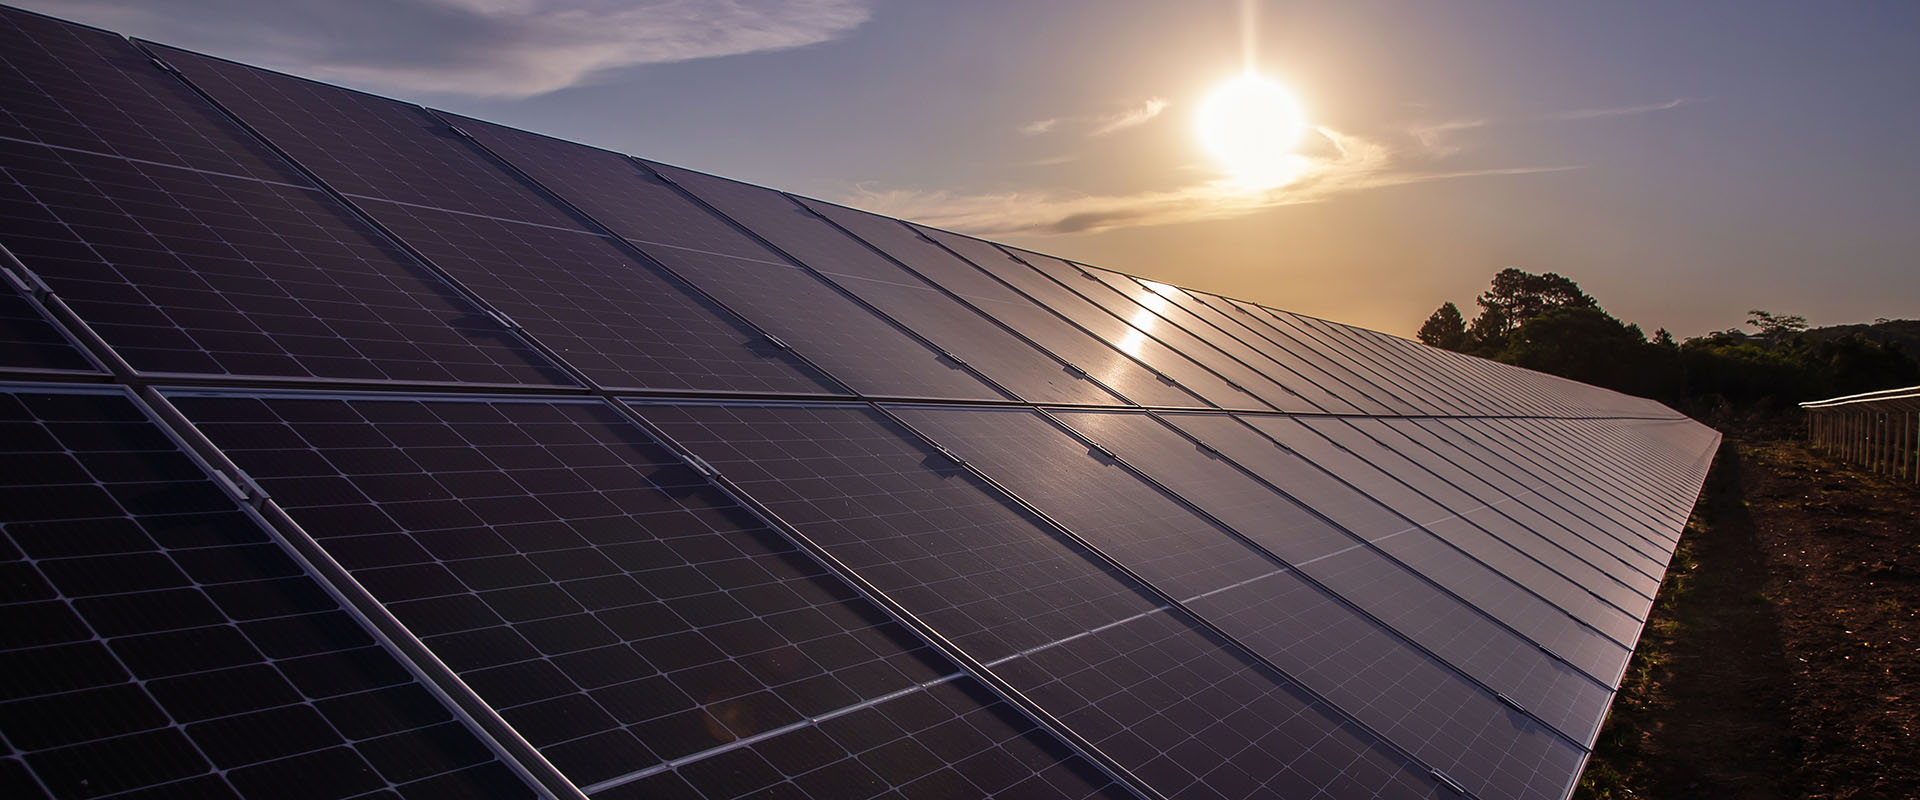 Energia limpa: saiba como funciona a usina fotovoltaica da Mercur